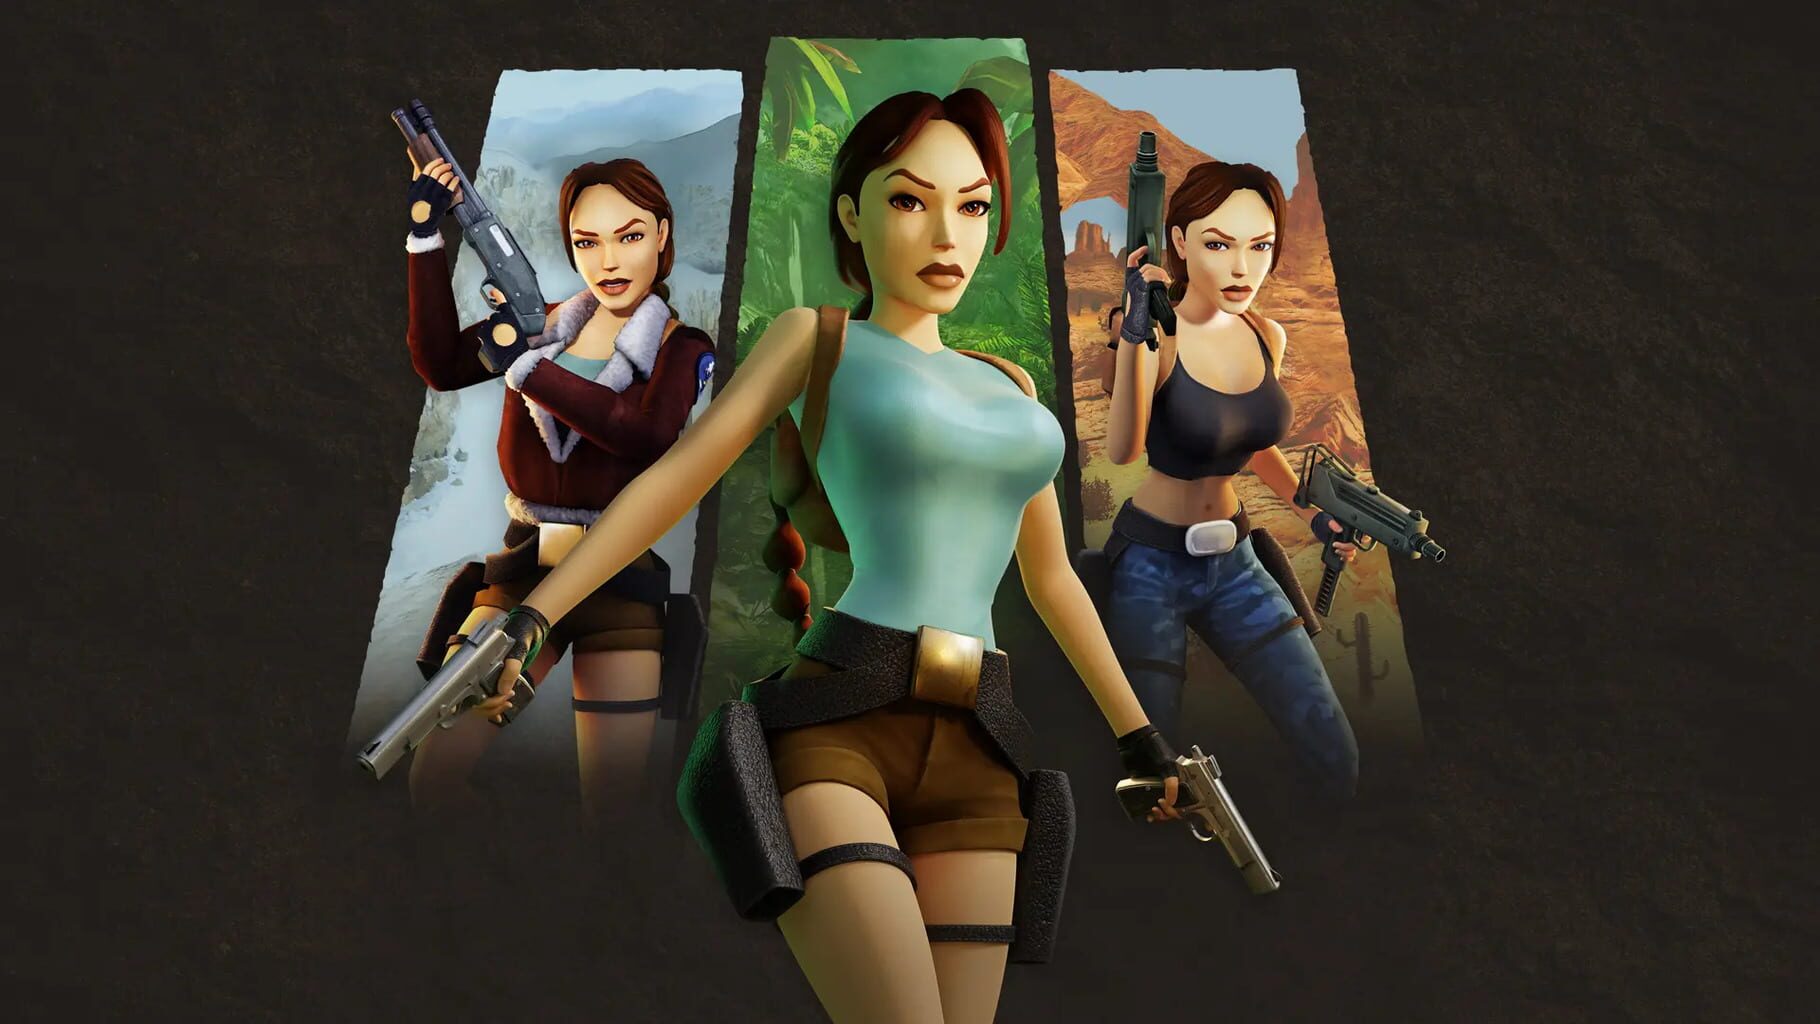 Tomb Raider I•II•III Remastered artwork